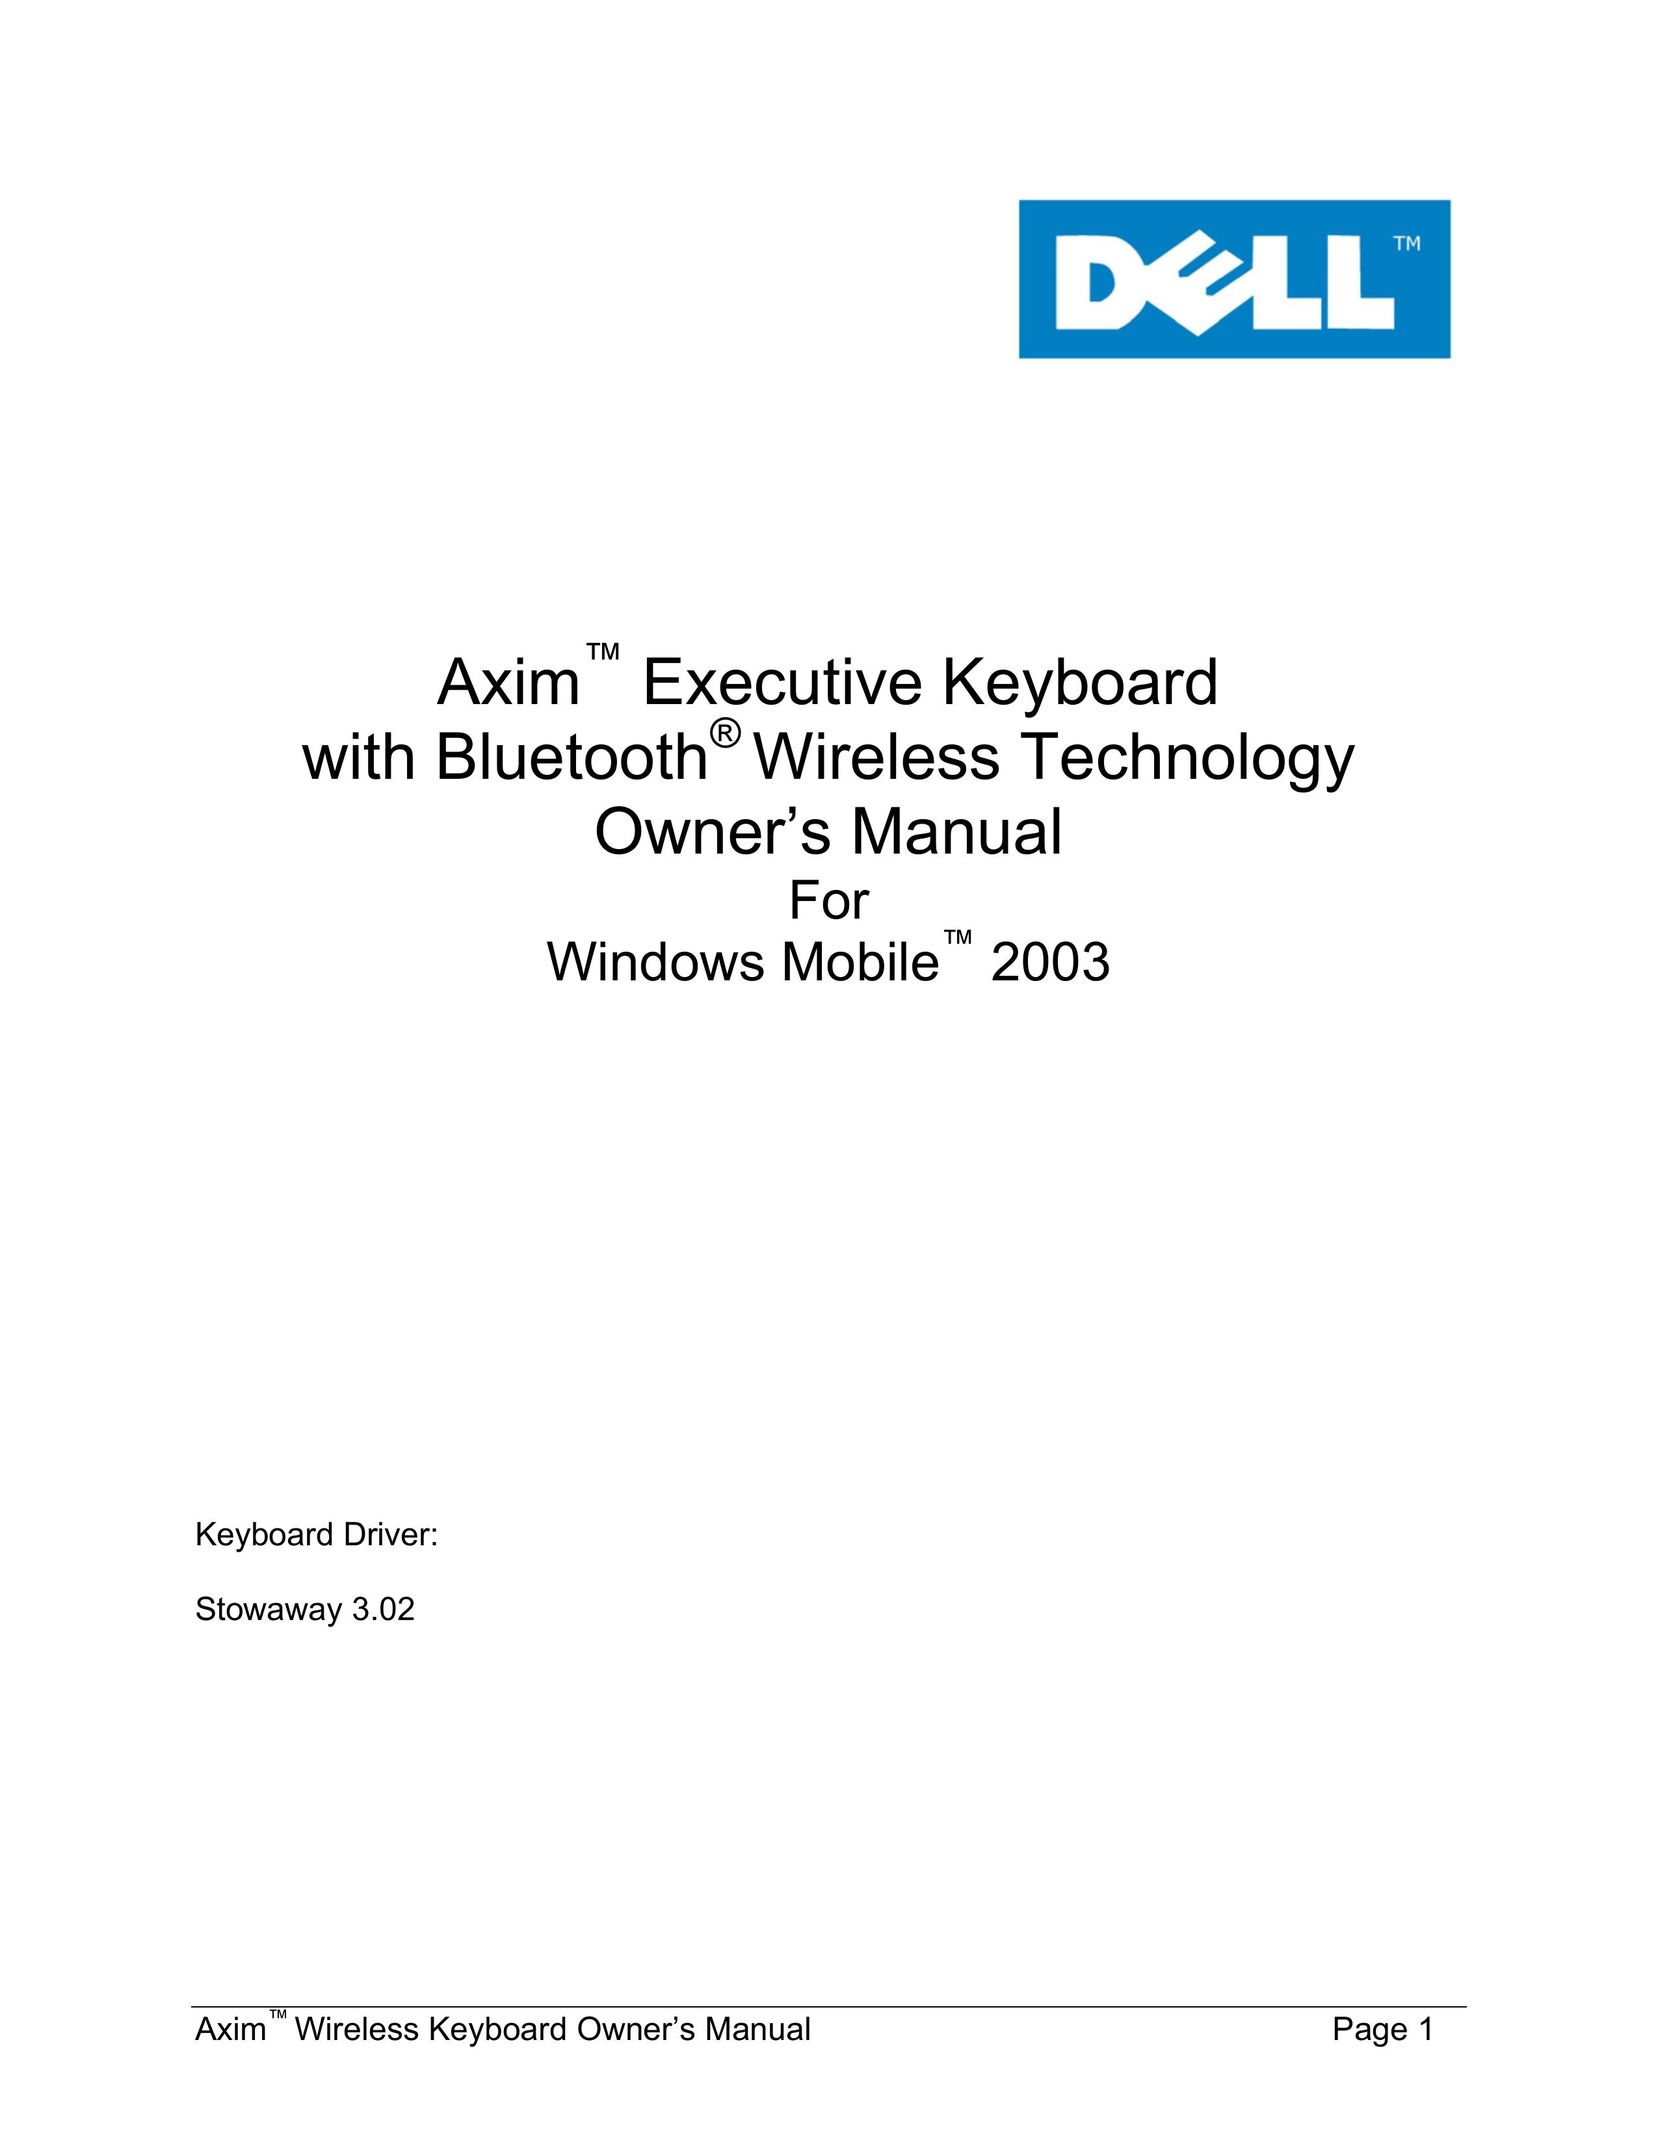 Dell Axim Computer Keyboard User Manual